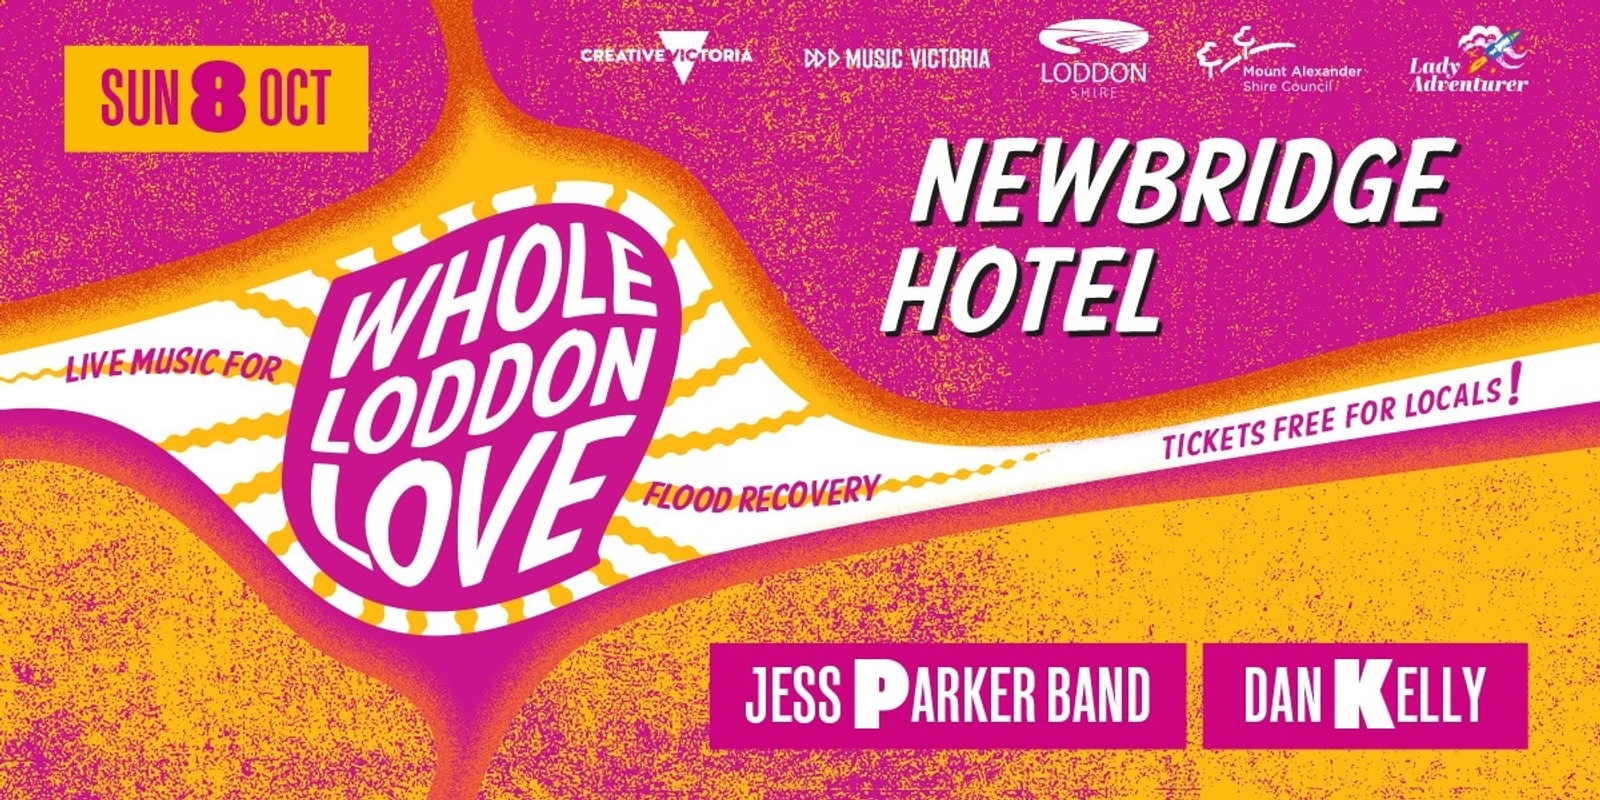 Banner image for Whole Loddon Love: Newbridge